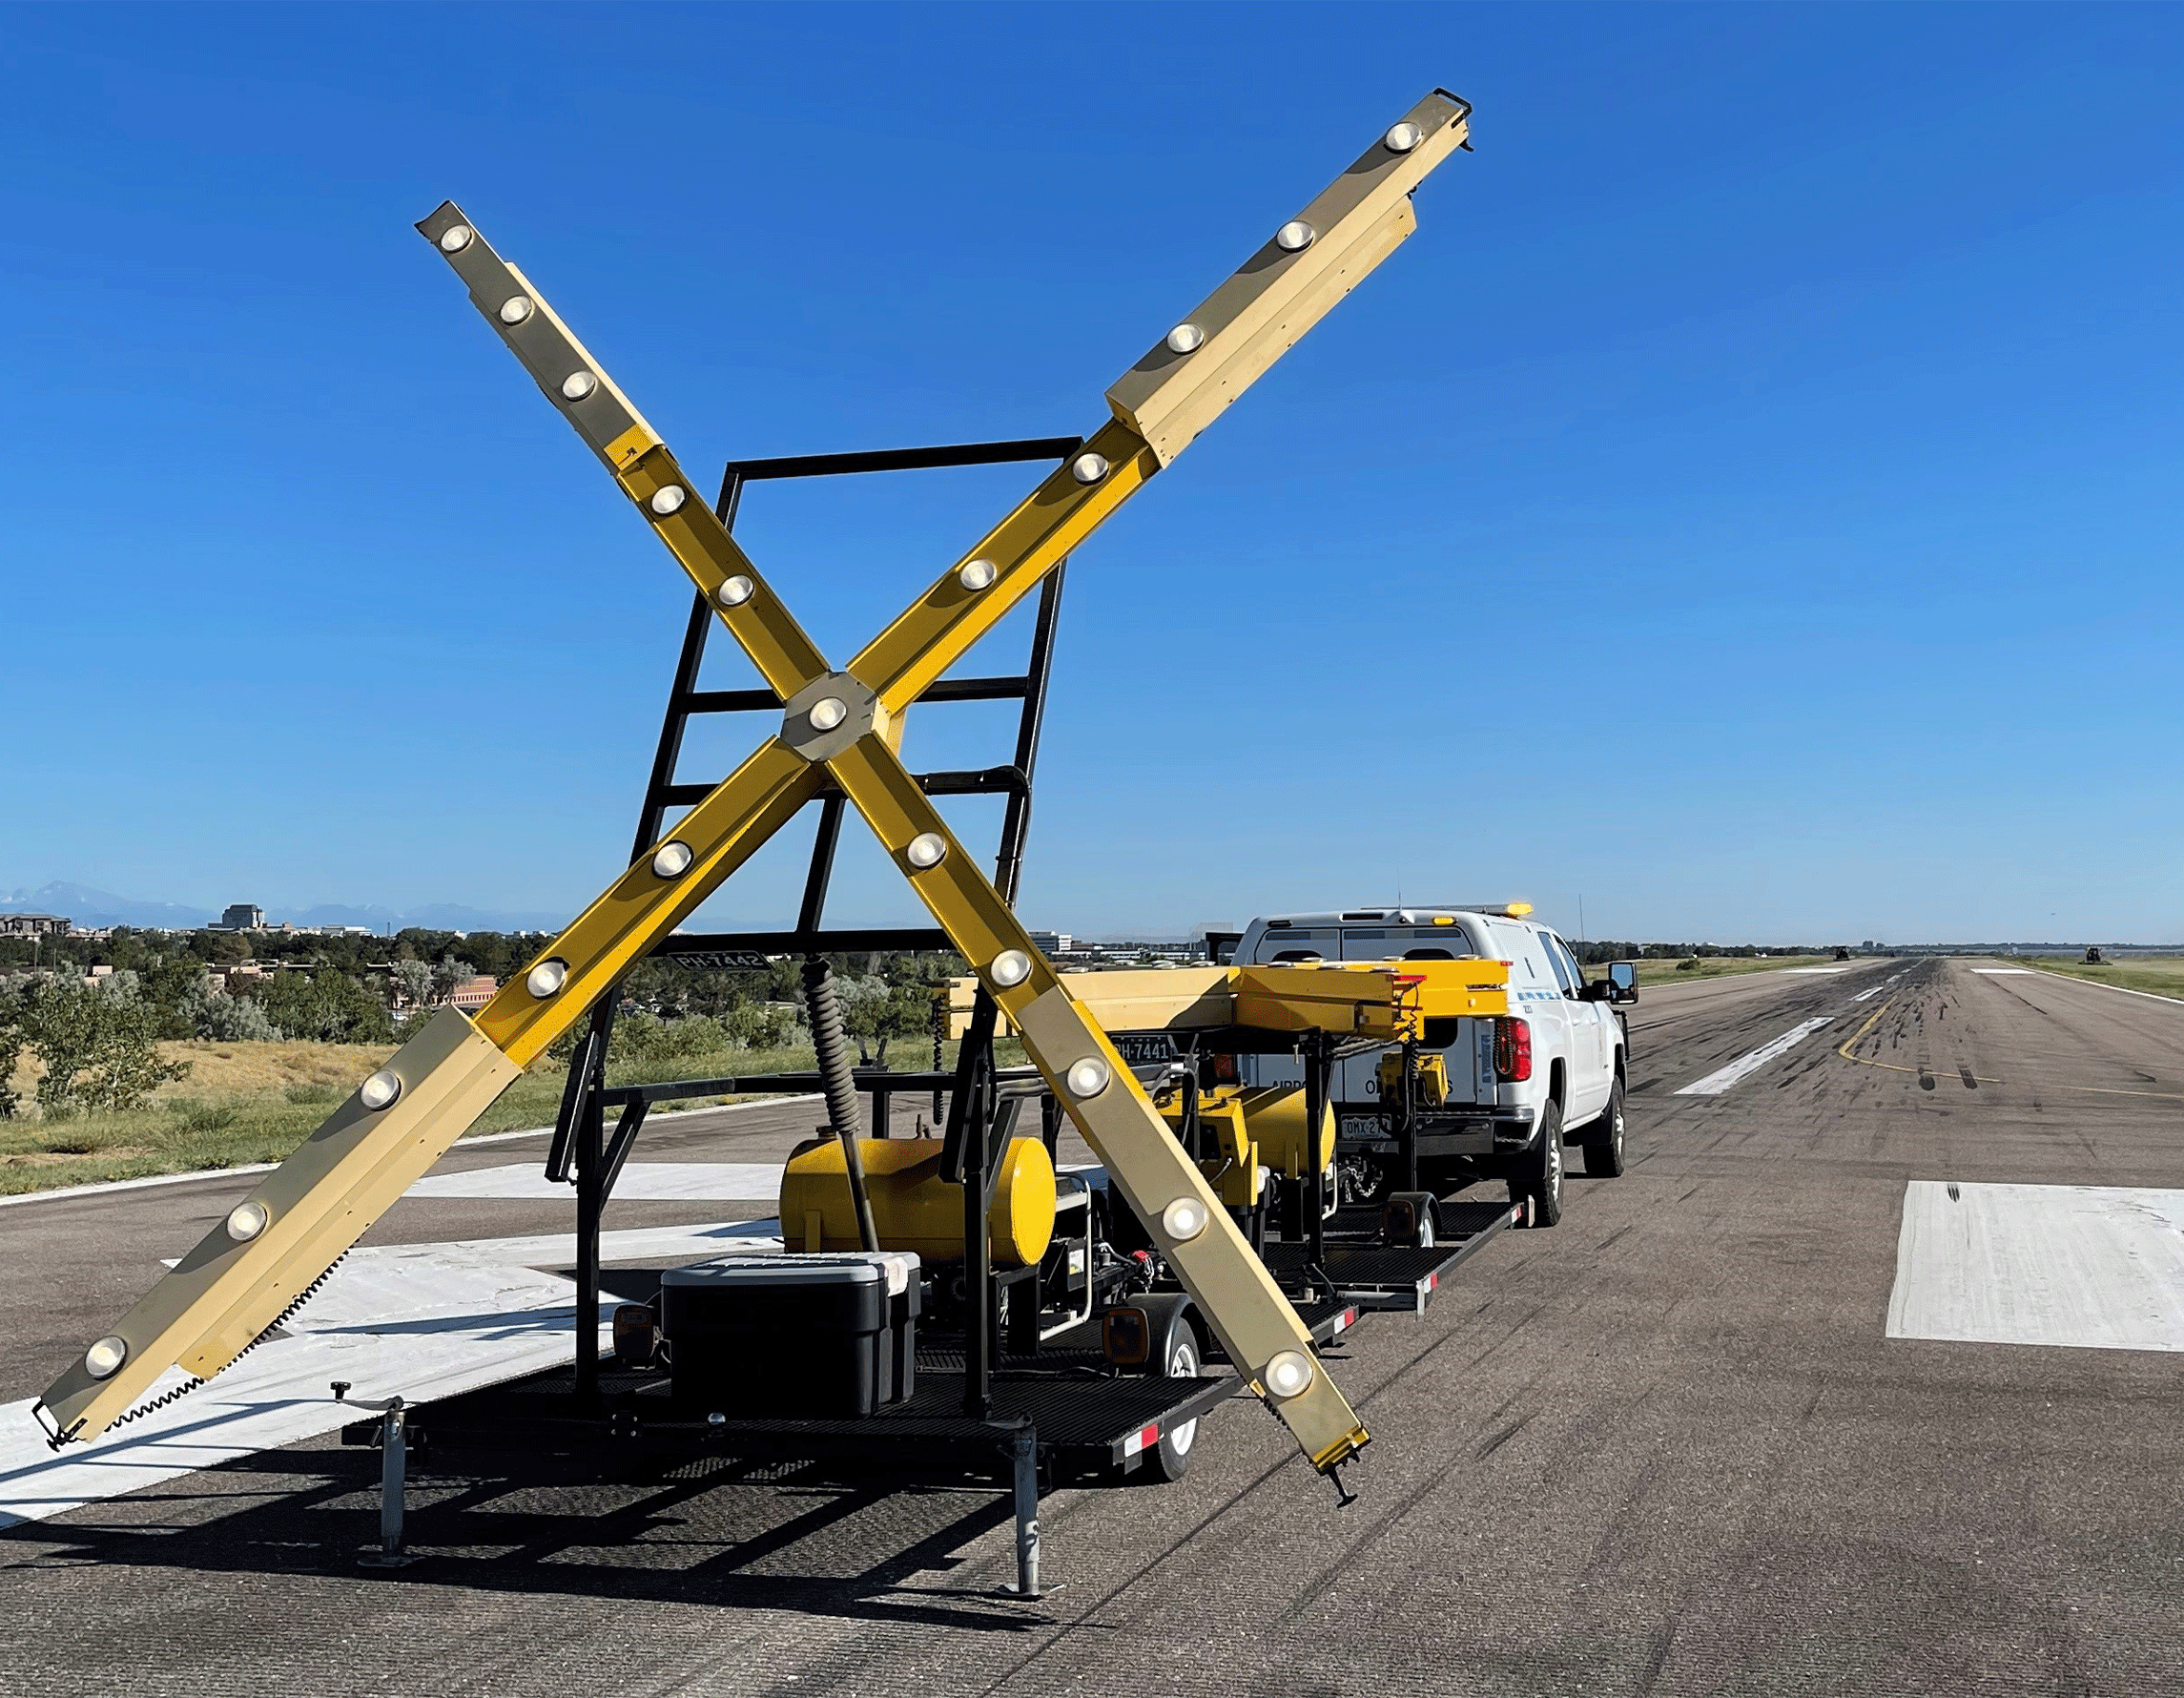 Maintenance vehicle on the runway